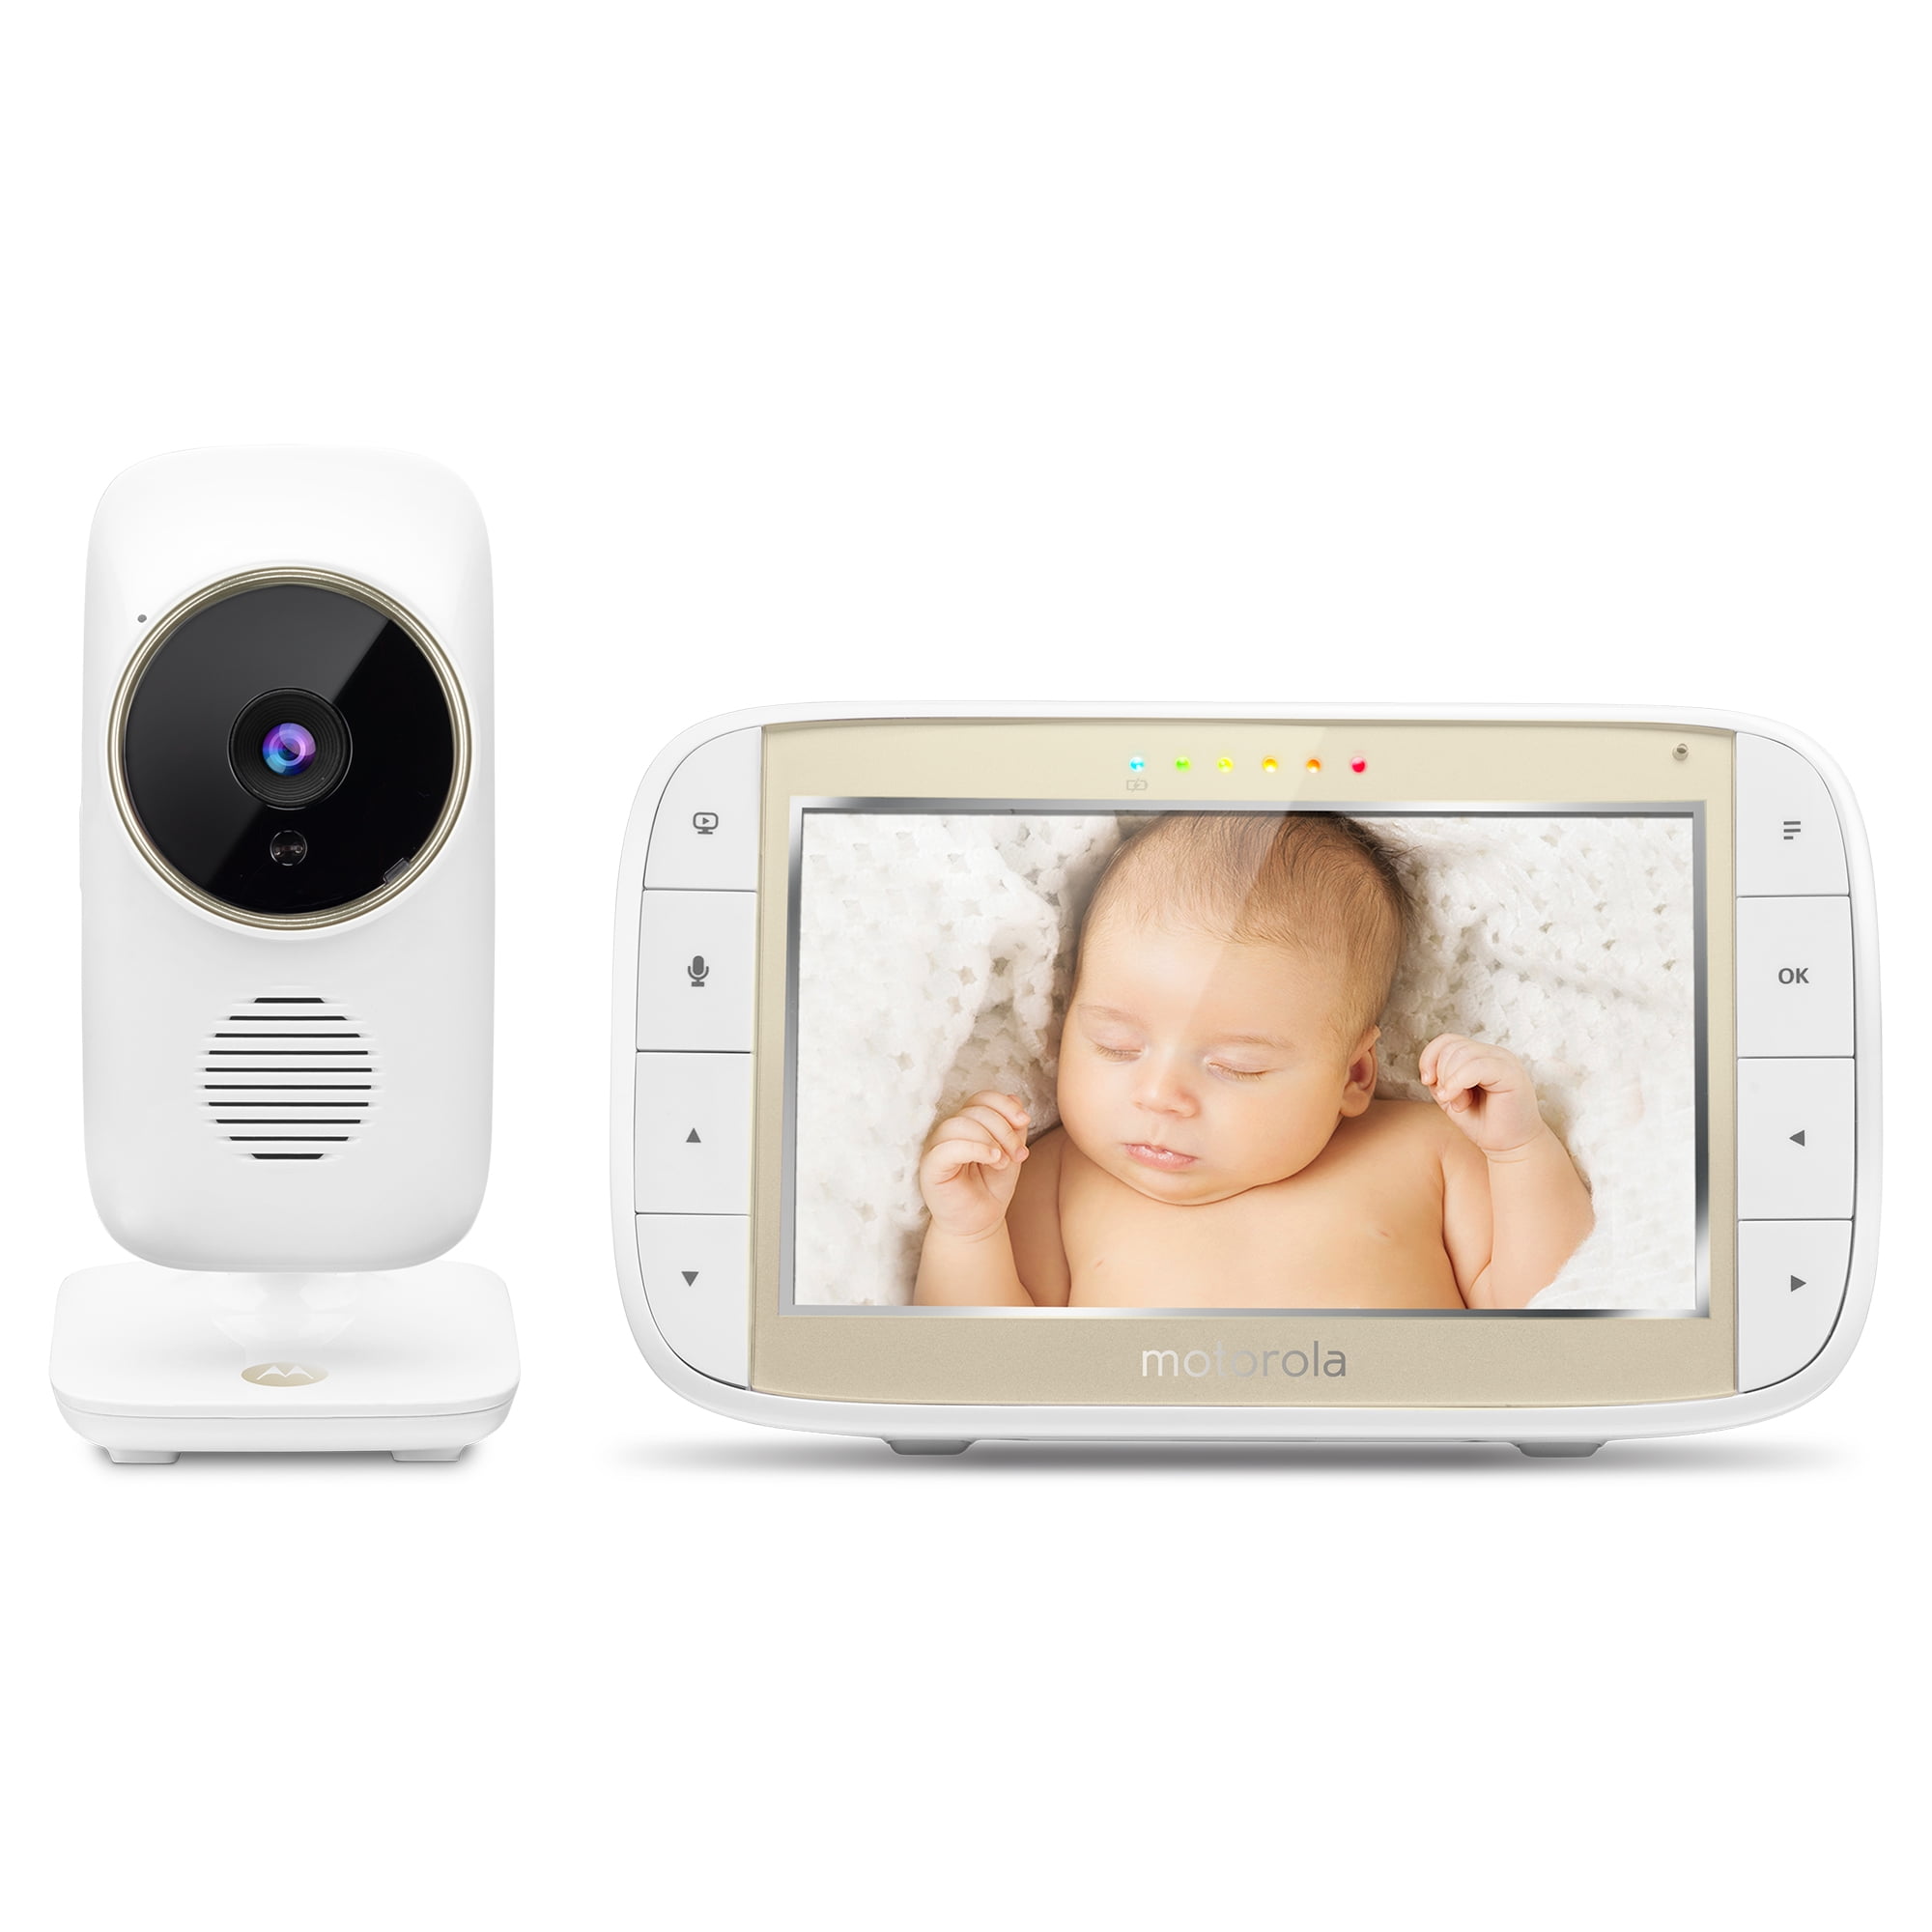 Motorola Mbp844 Connect Wi Fi Baby Monitoring Camera Walmart Com Walmart Com